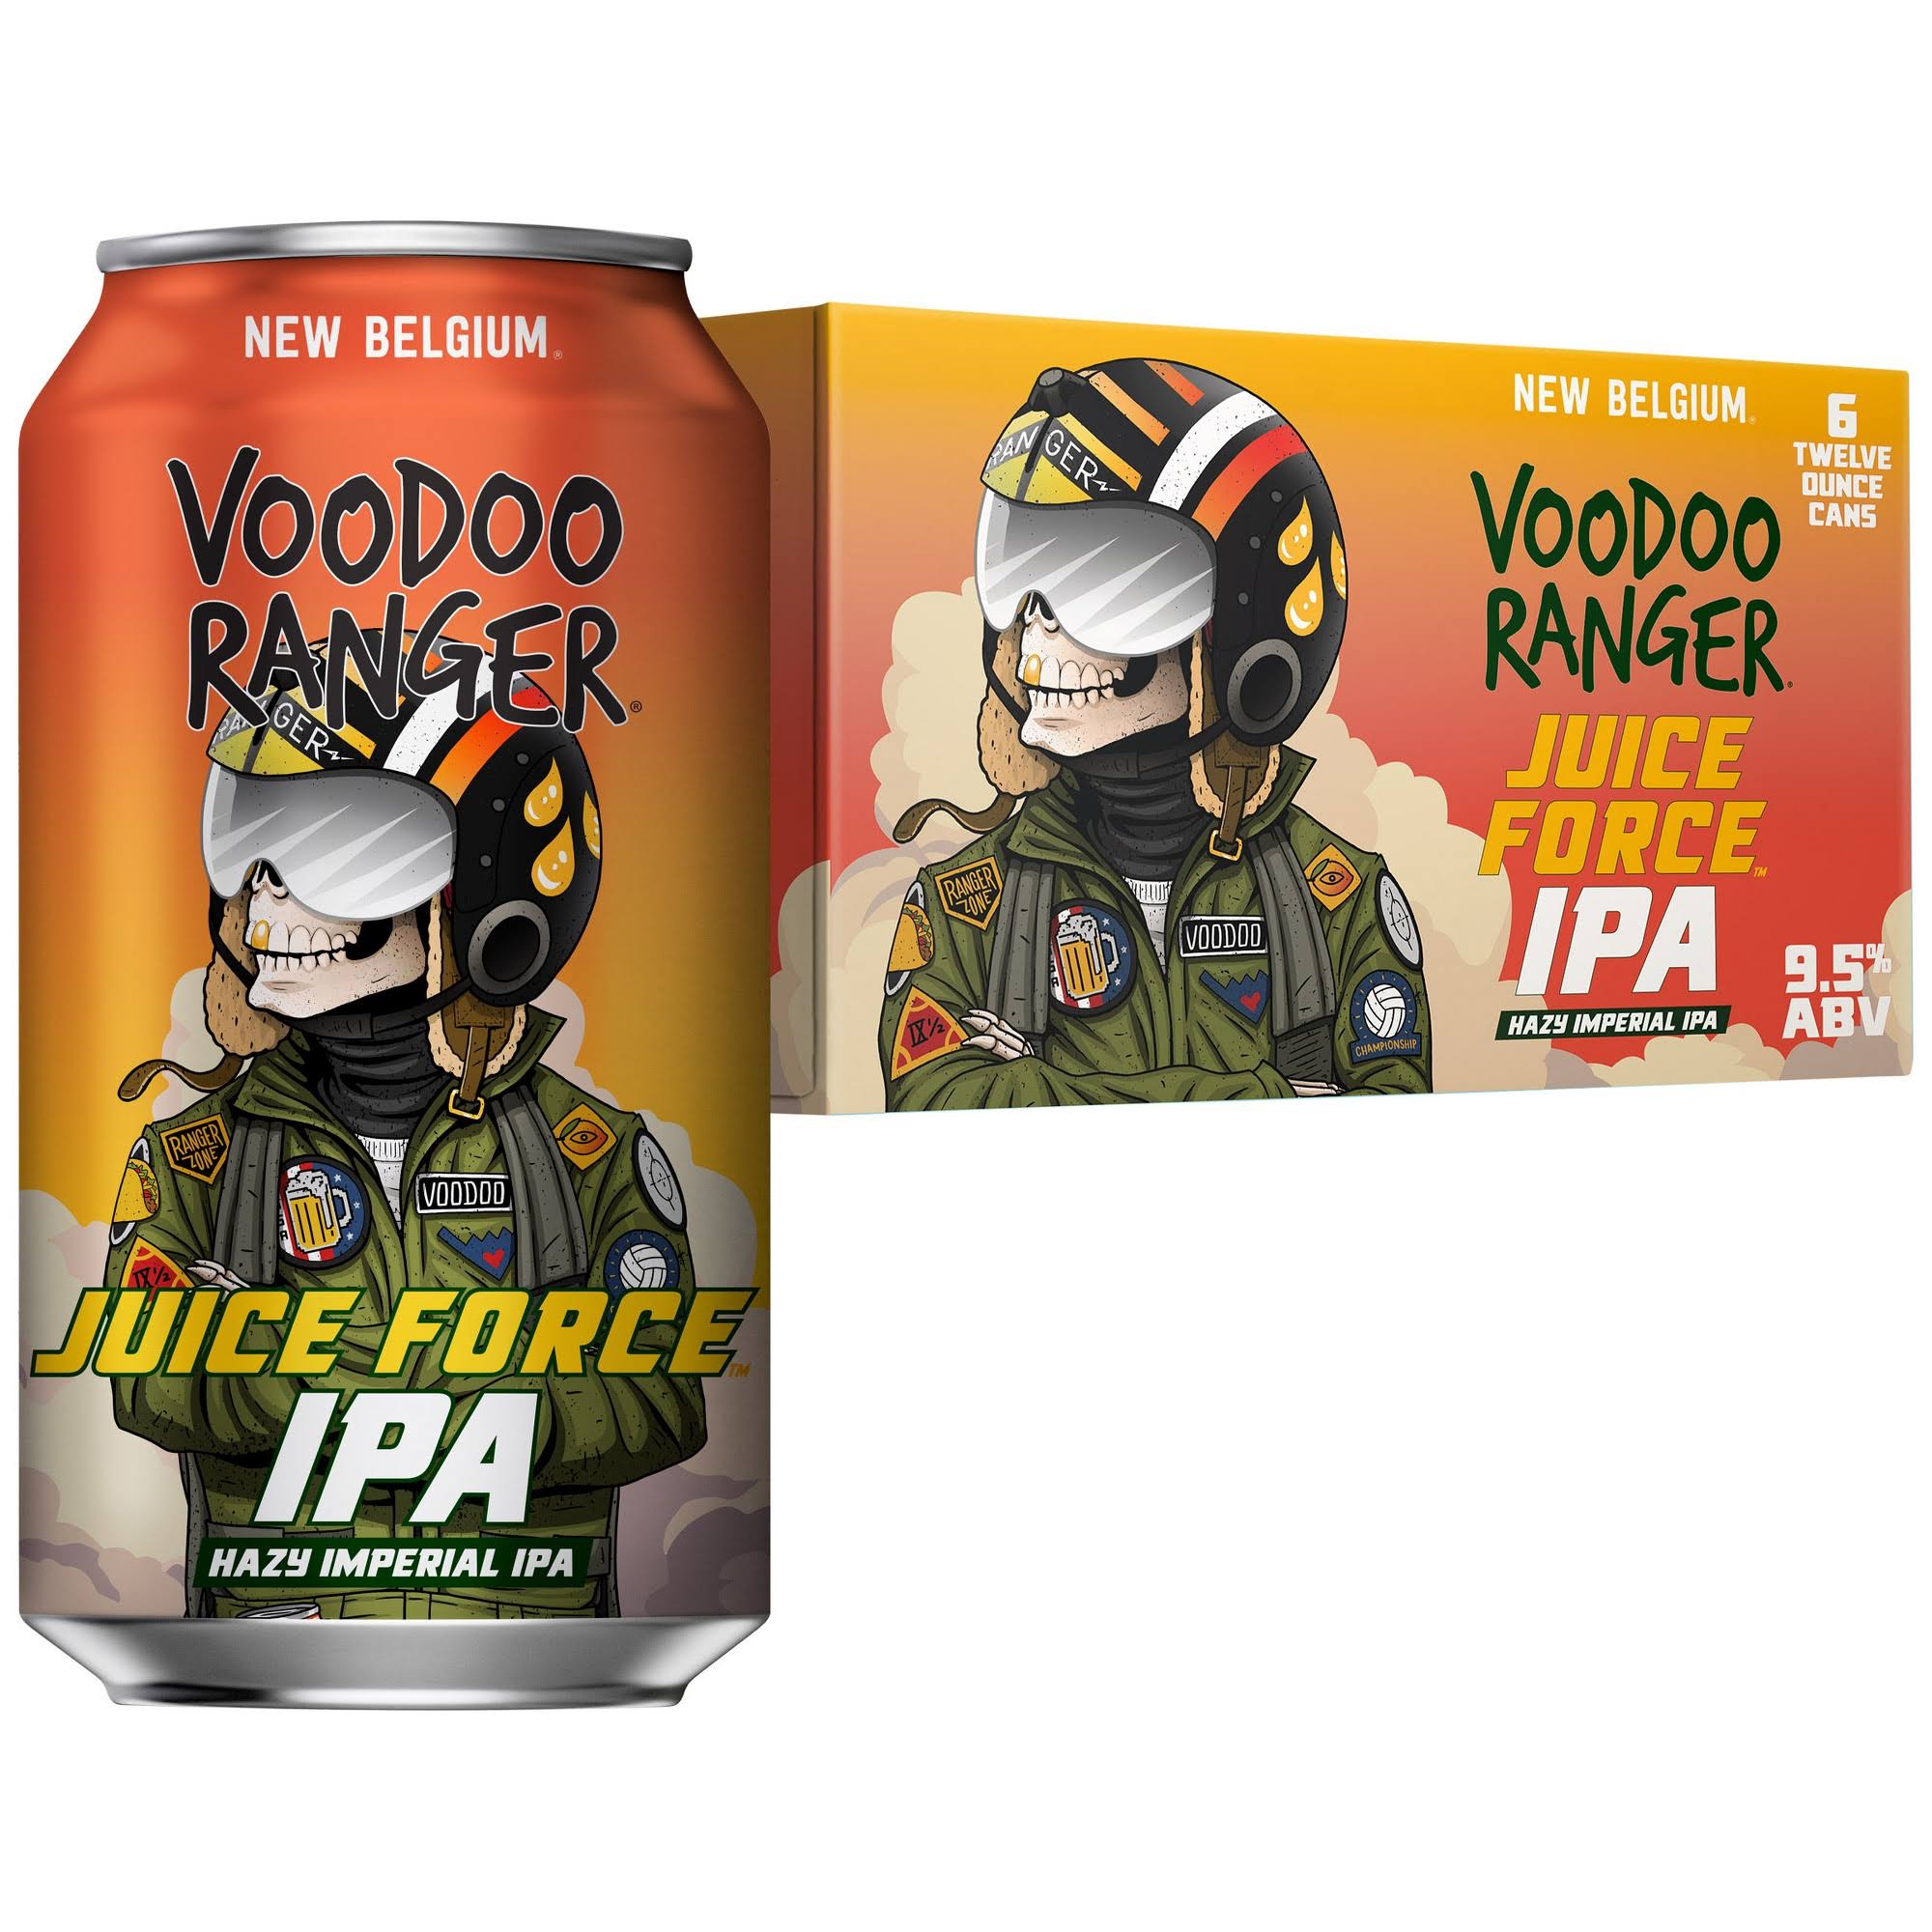 New Belgium Voodoo Ranger Beer, Hazy Imperial IPA, Juice Force - 6 pack, 12 oz cans